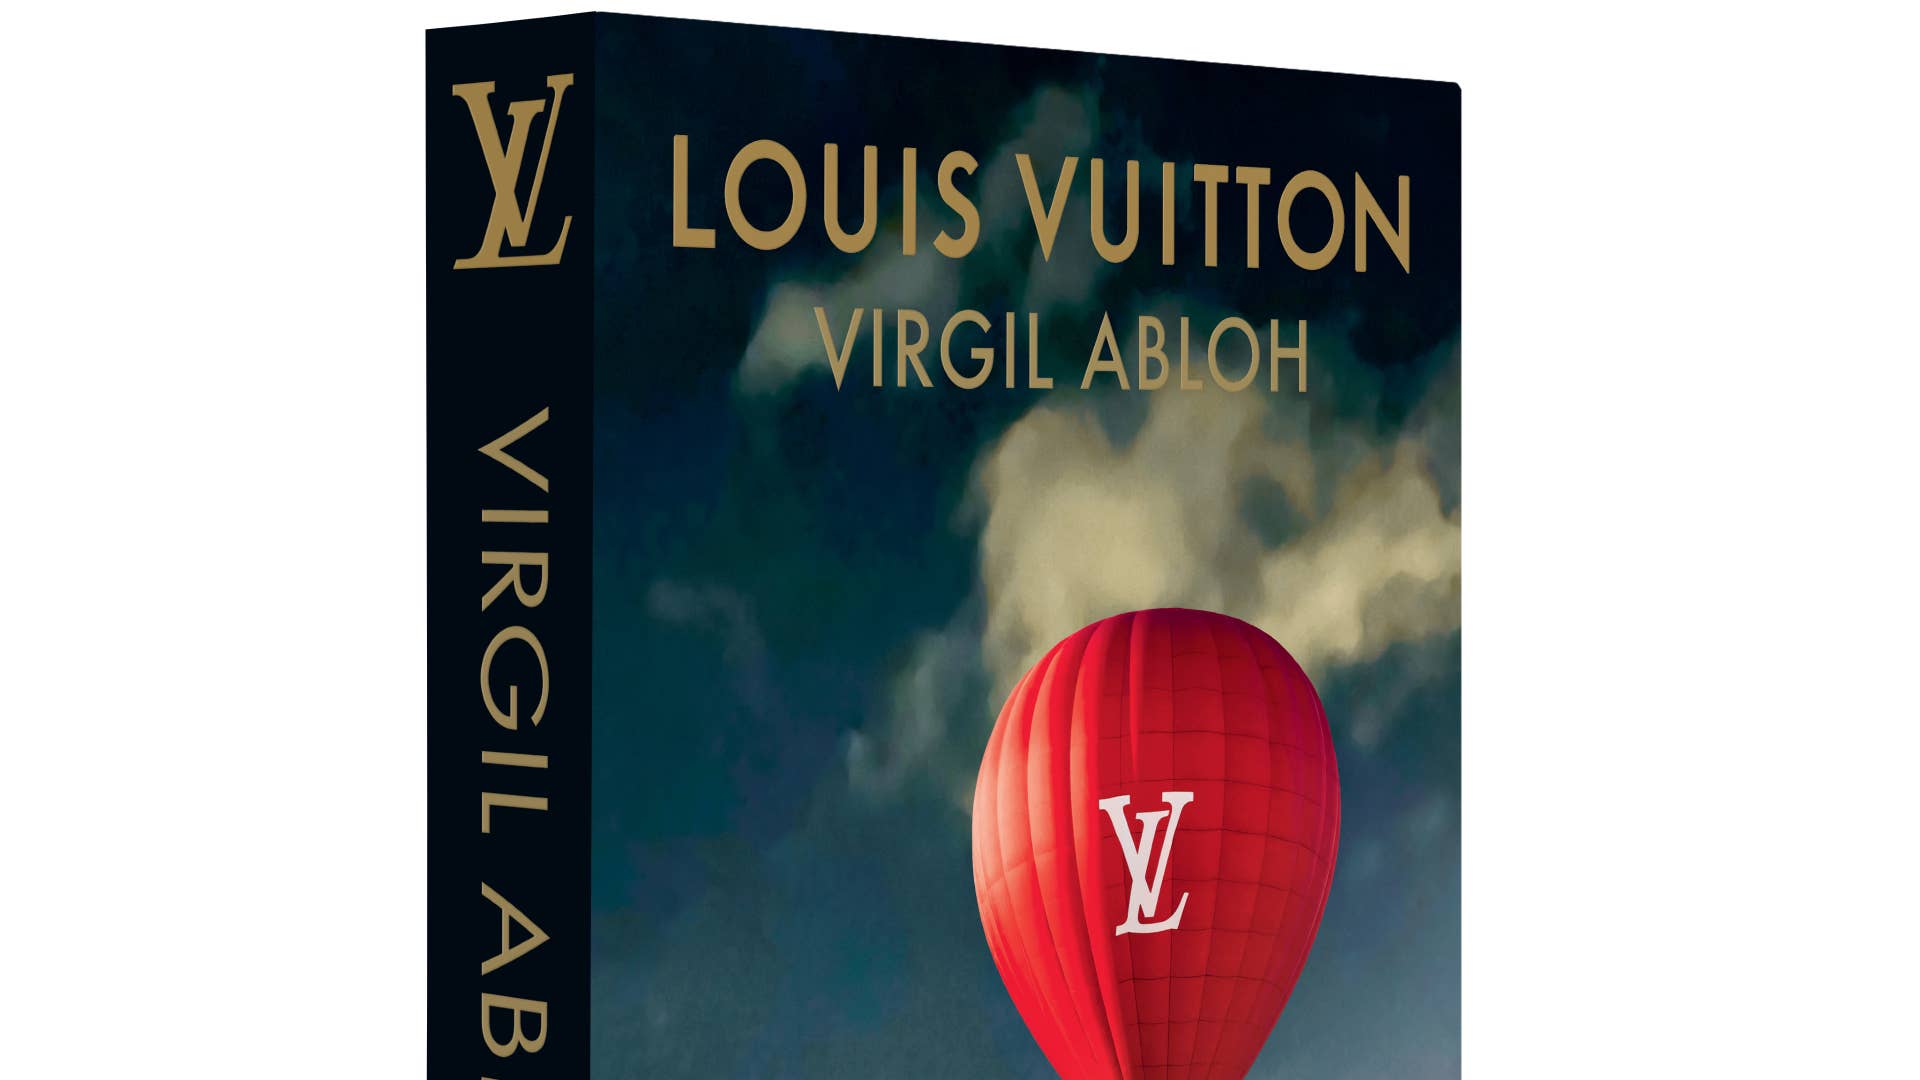 Louis Vuitton to Release Archive Pieces Designed by Virgil Abloh